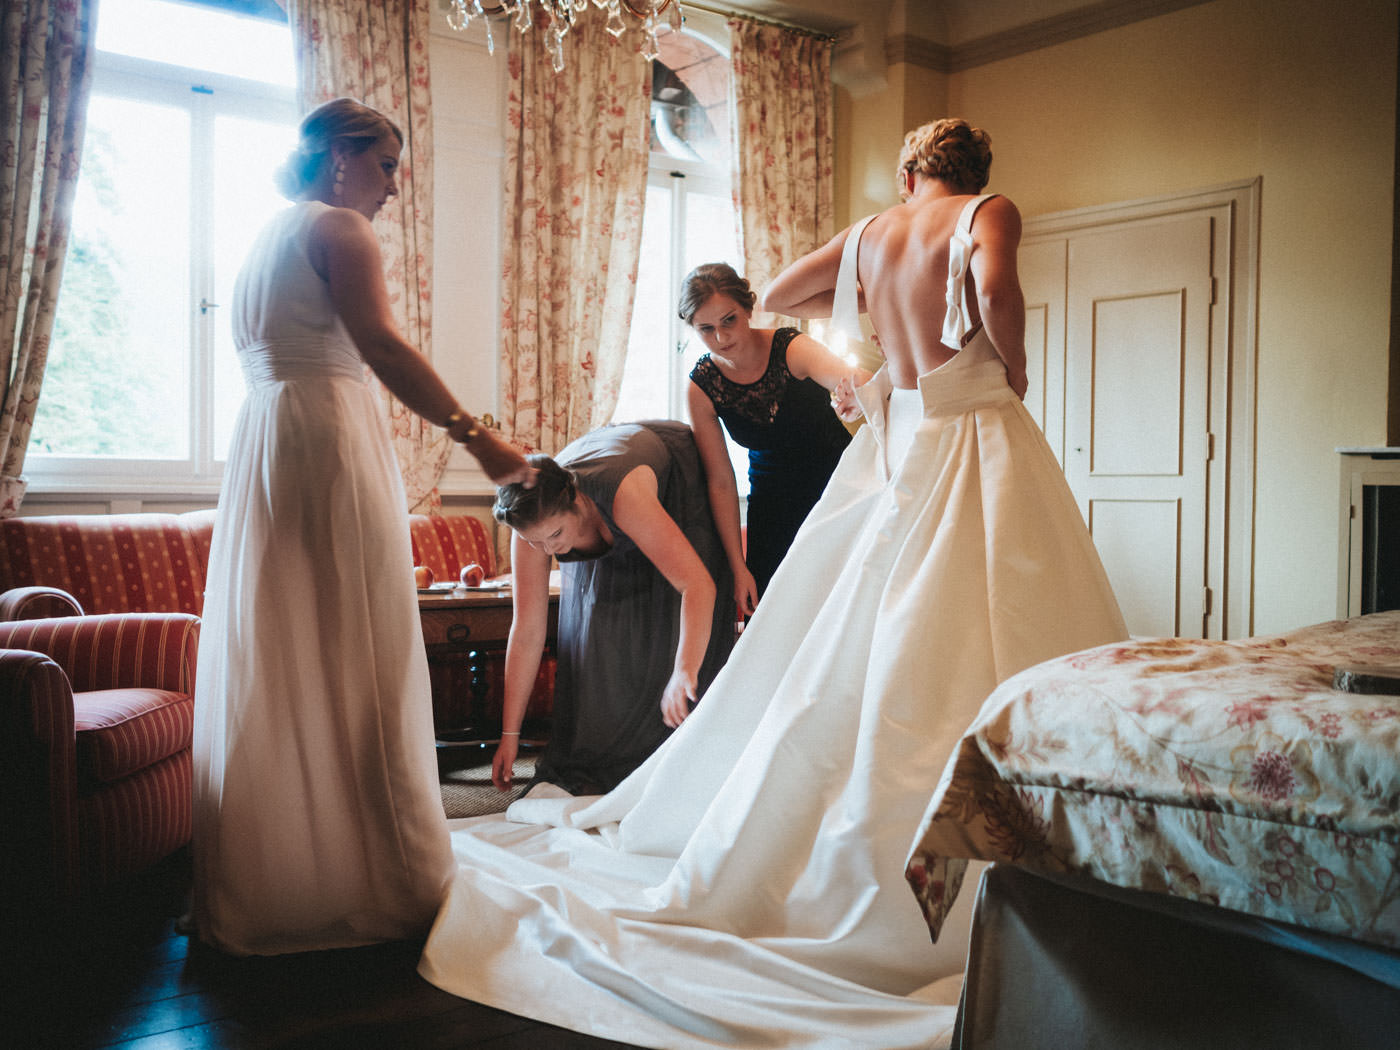 Bride getting dressed with her bridesmaids - wedding photos Schloss Saareck